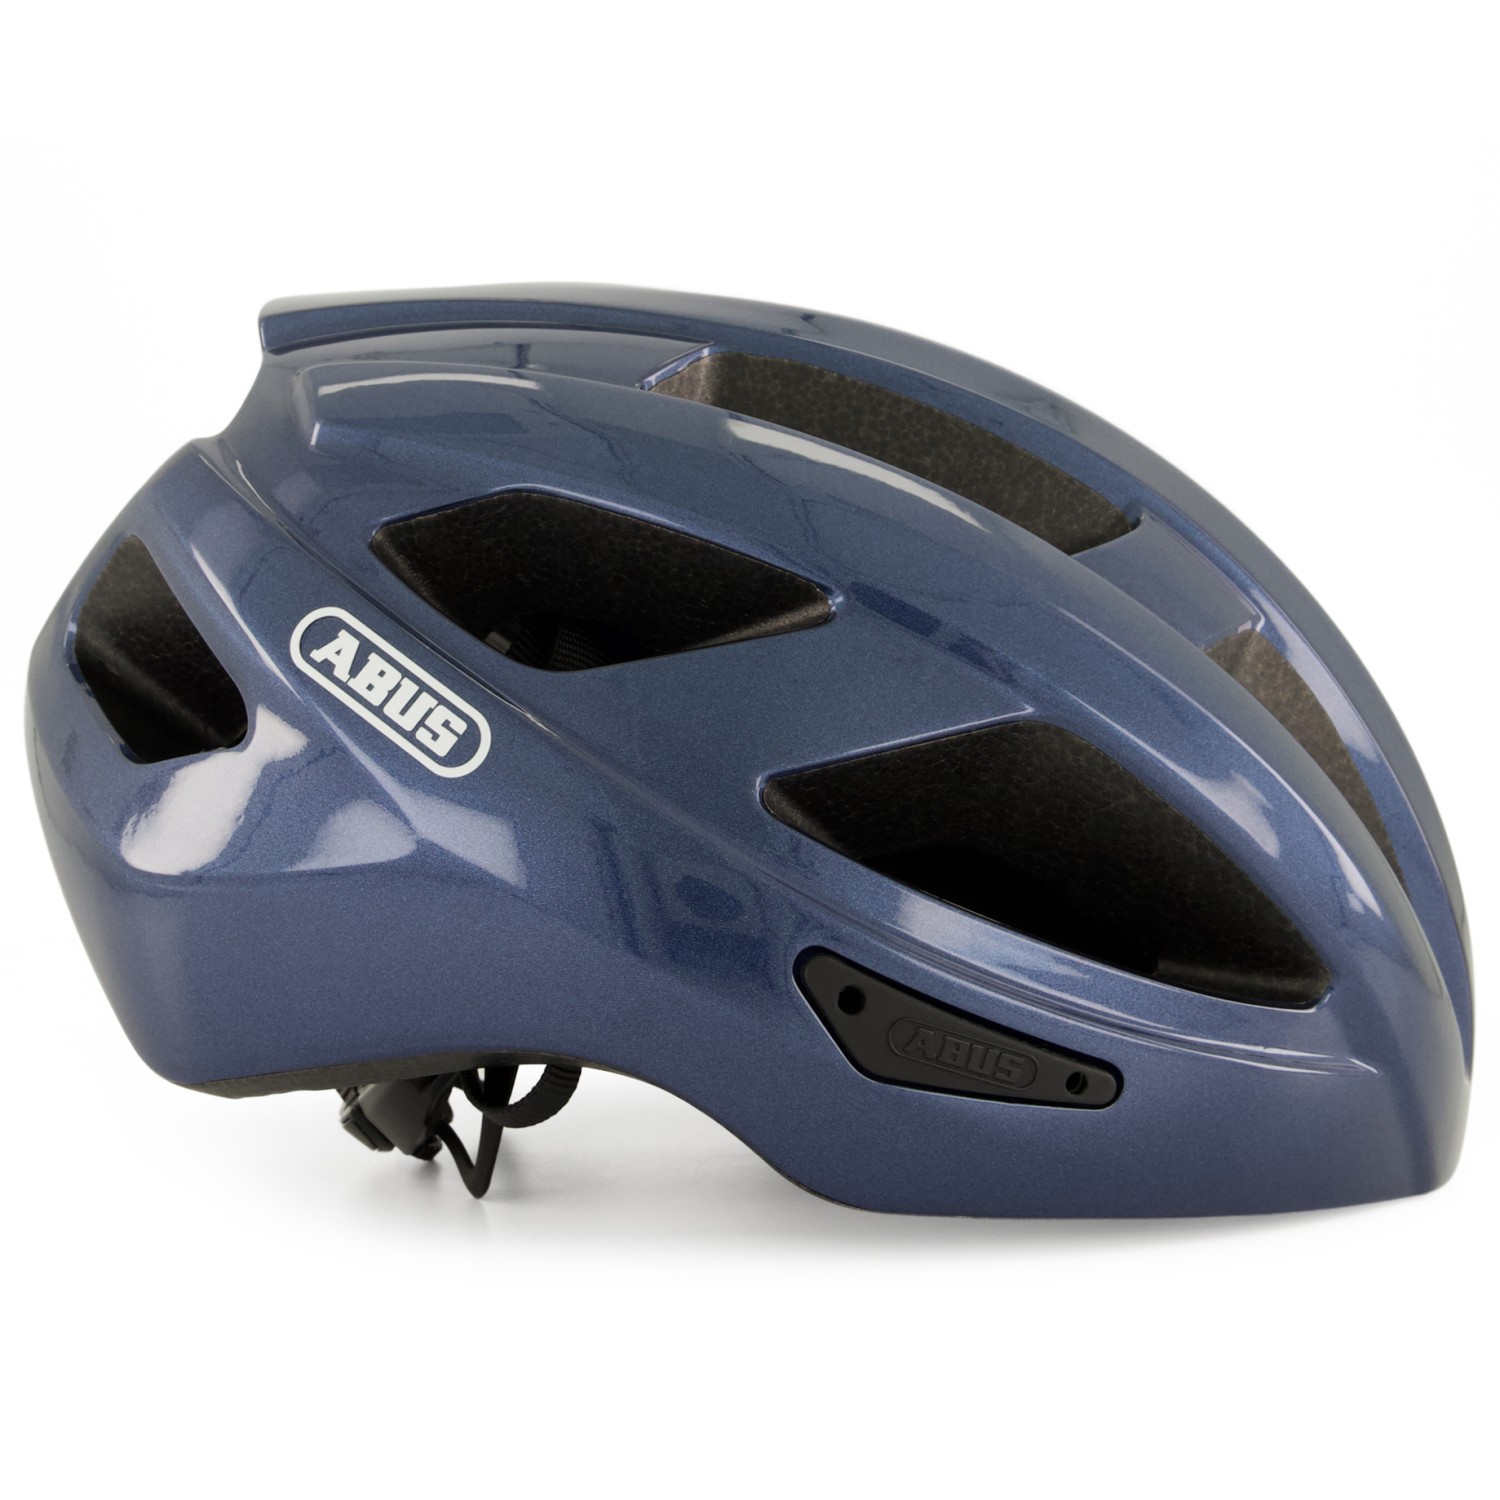 Велосипедный шлем Abus Macator, цвет Midnight Blue